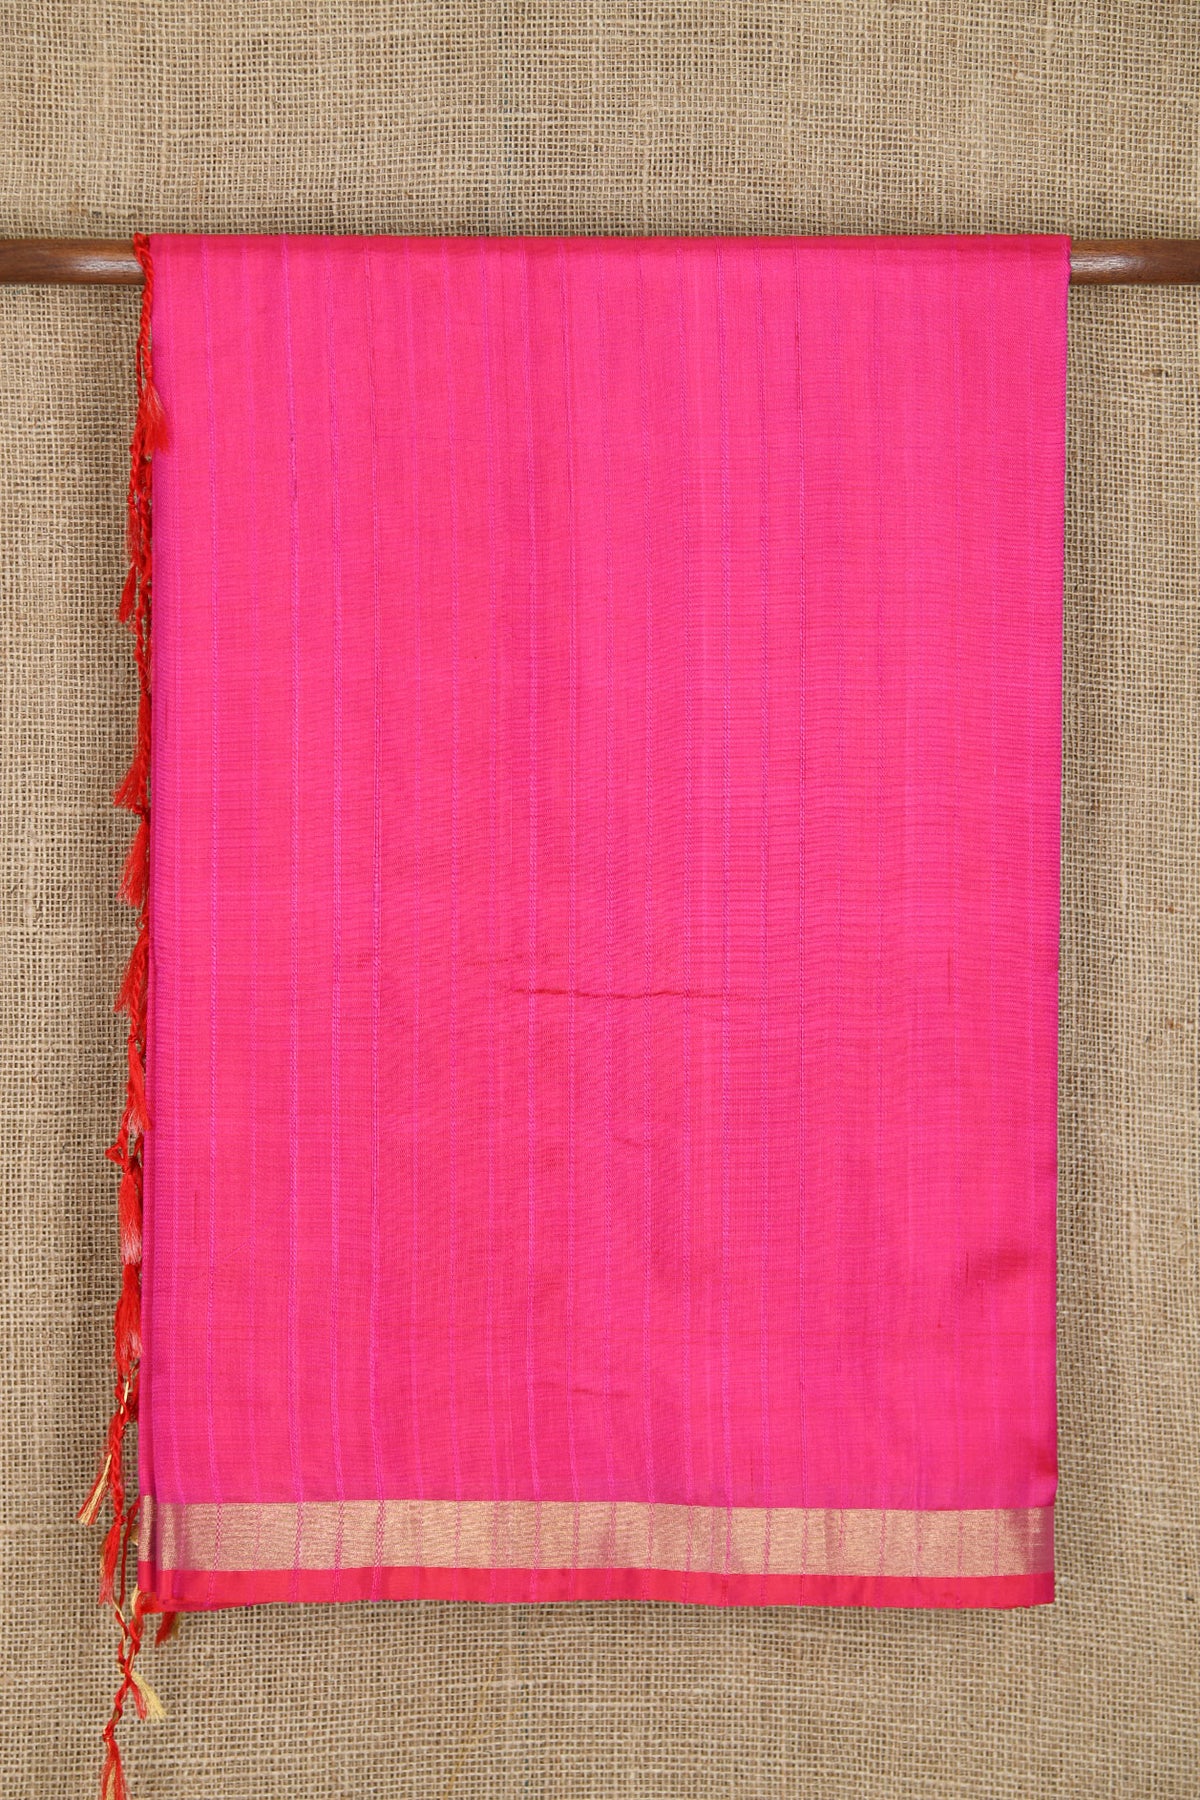 Bavanchi Border In Self Stripes Hot Pink Soft Silk Saree